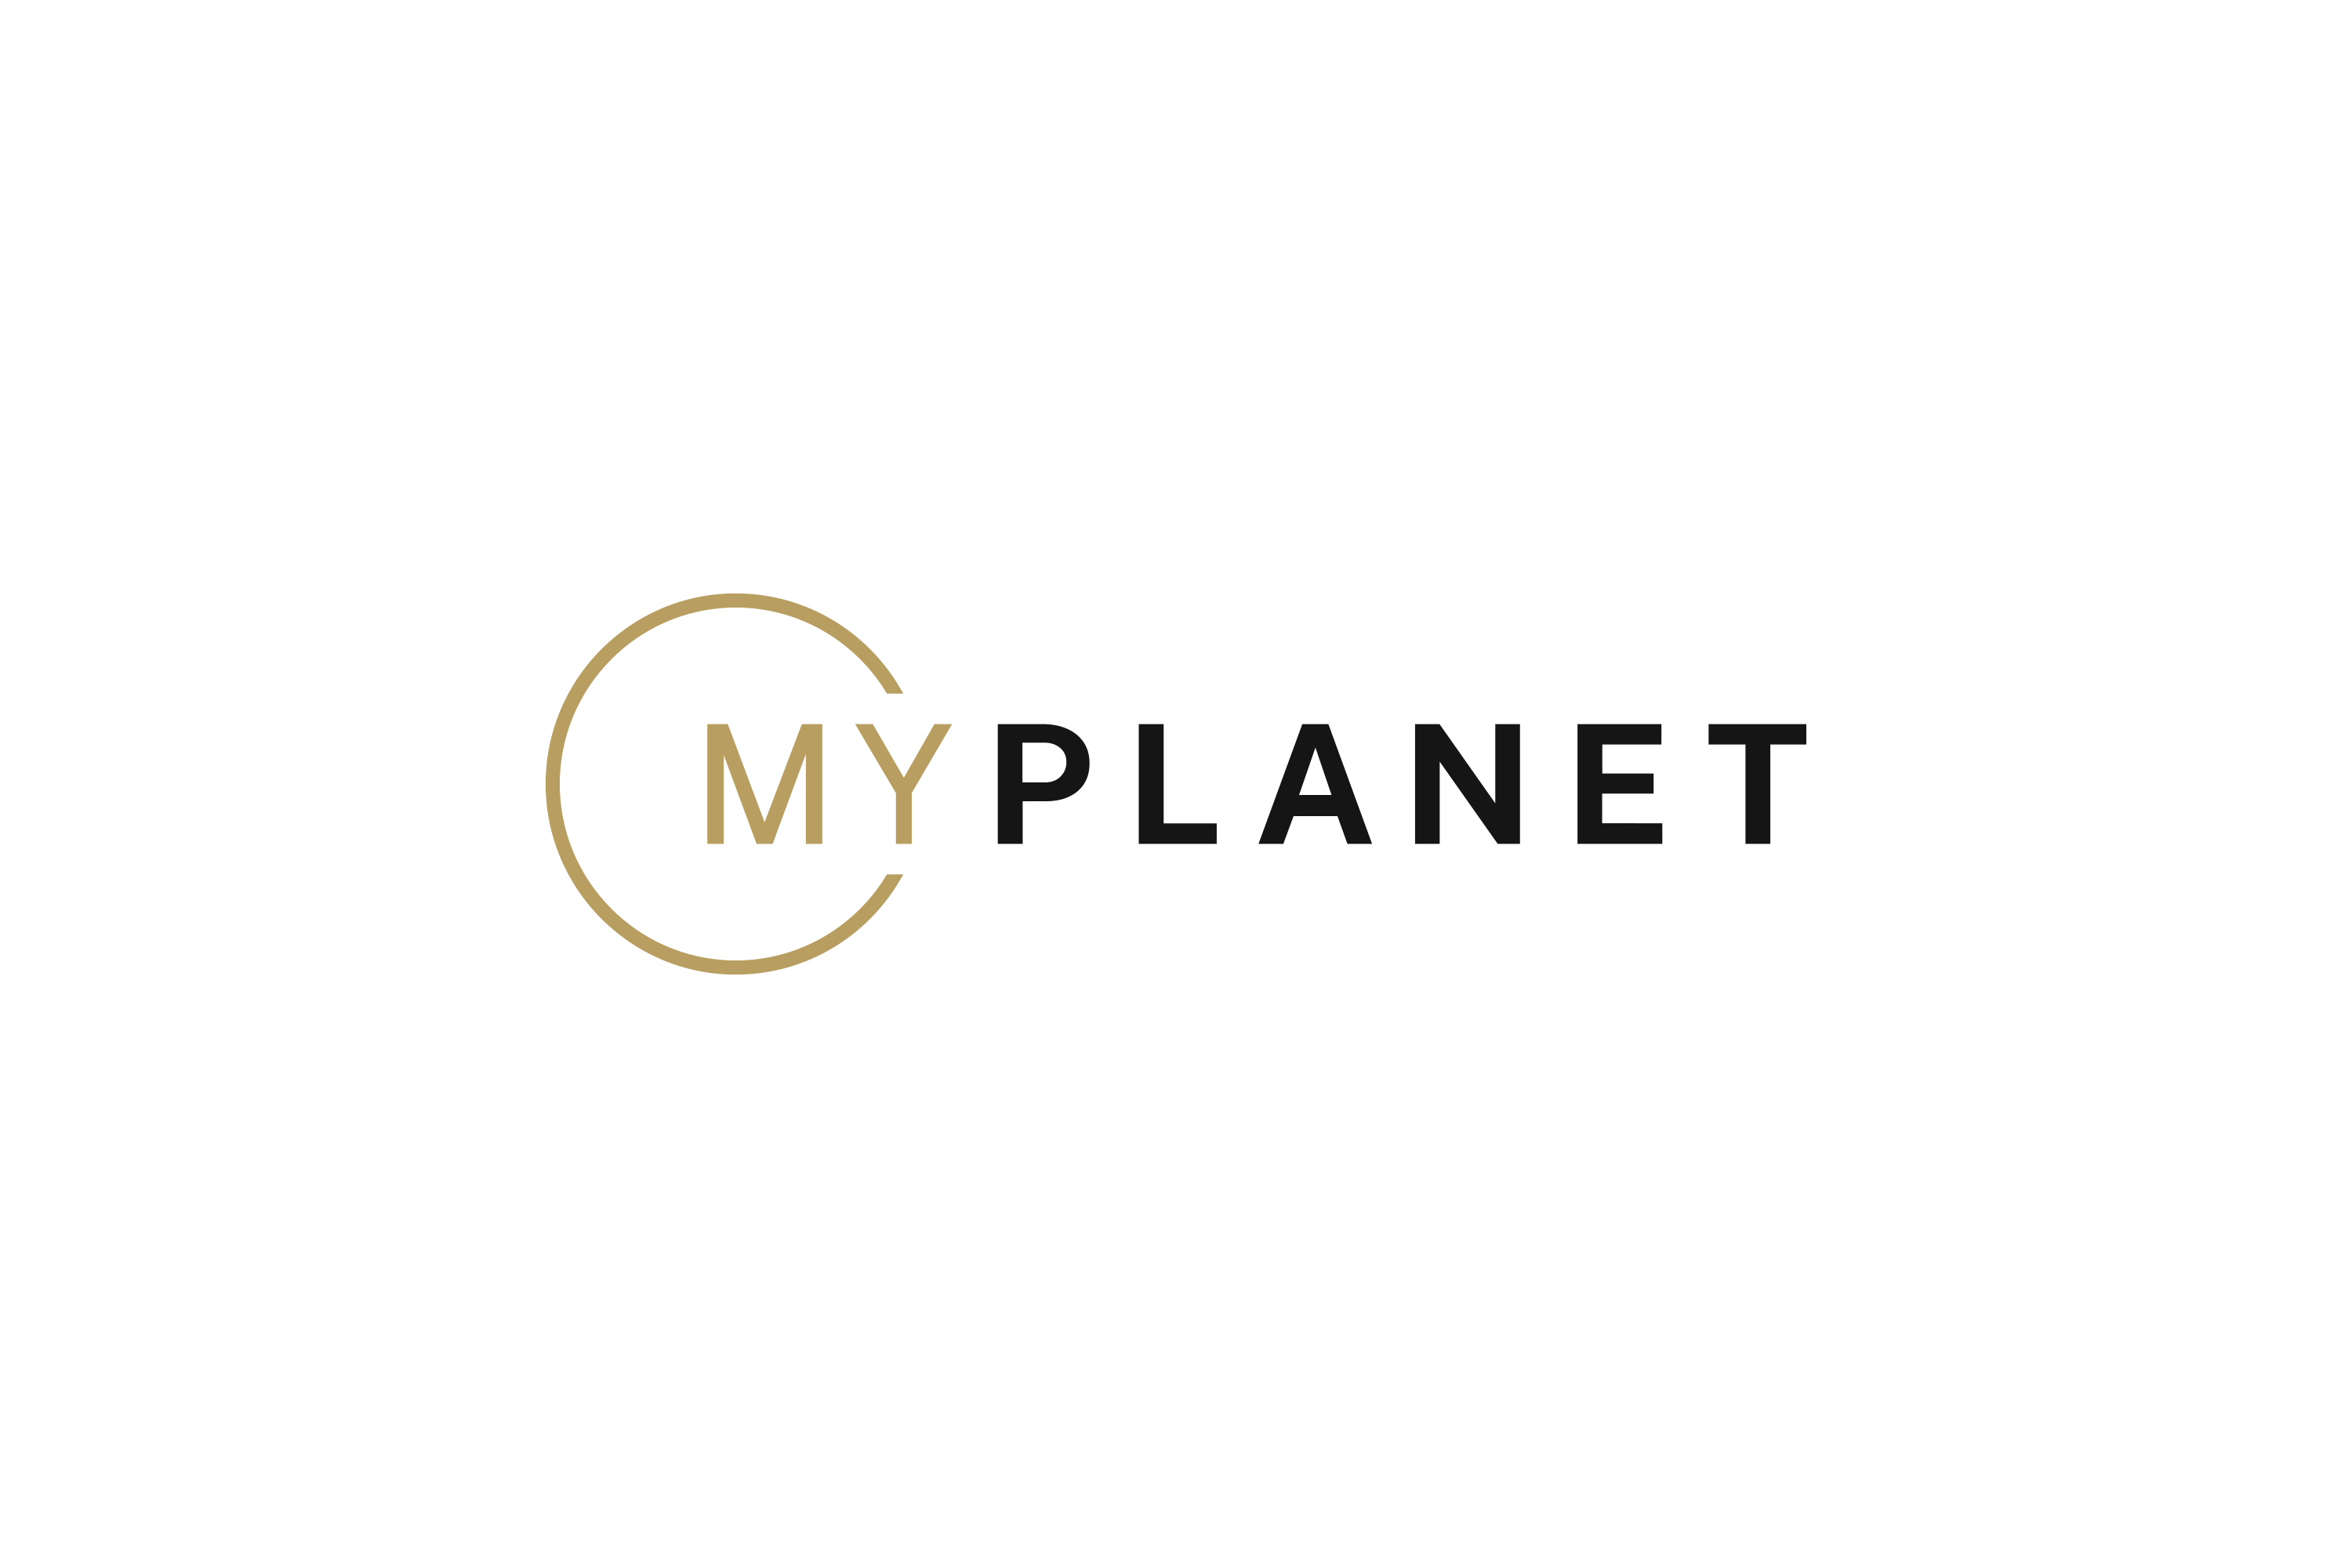 Chris-Reynolds-Logos-MyPlanet-Logo